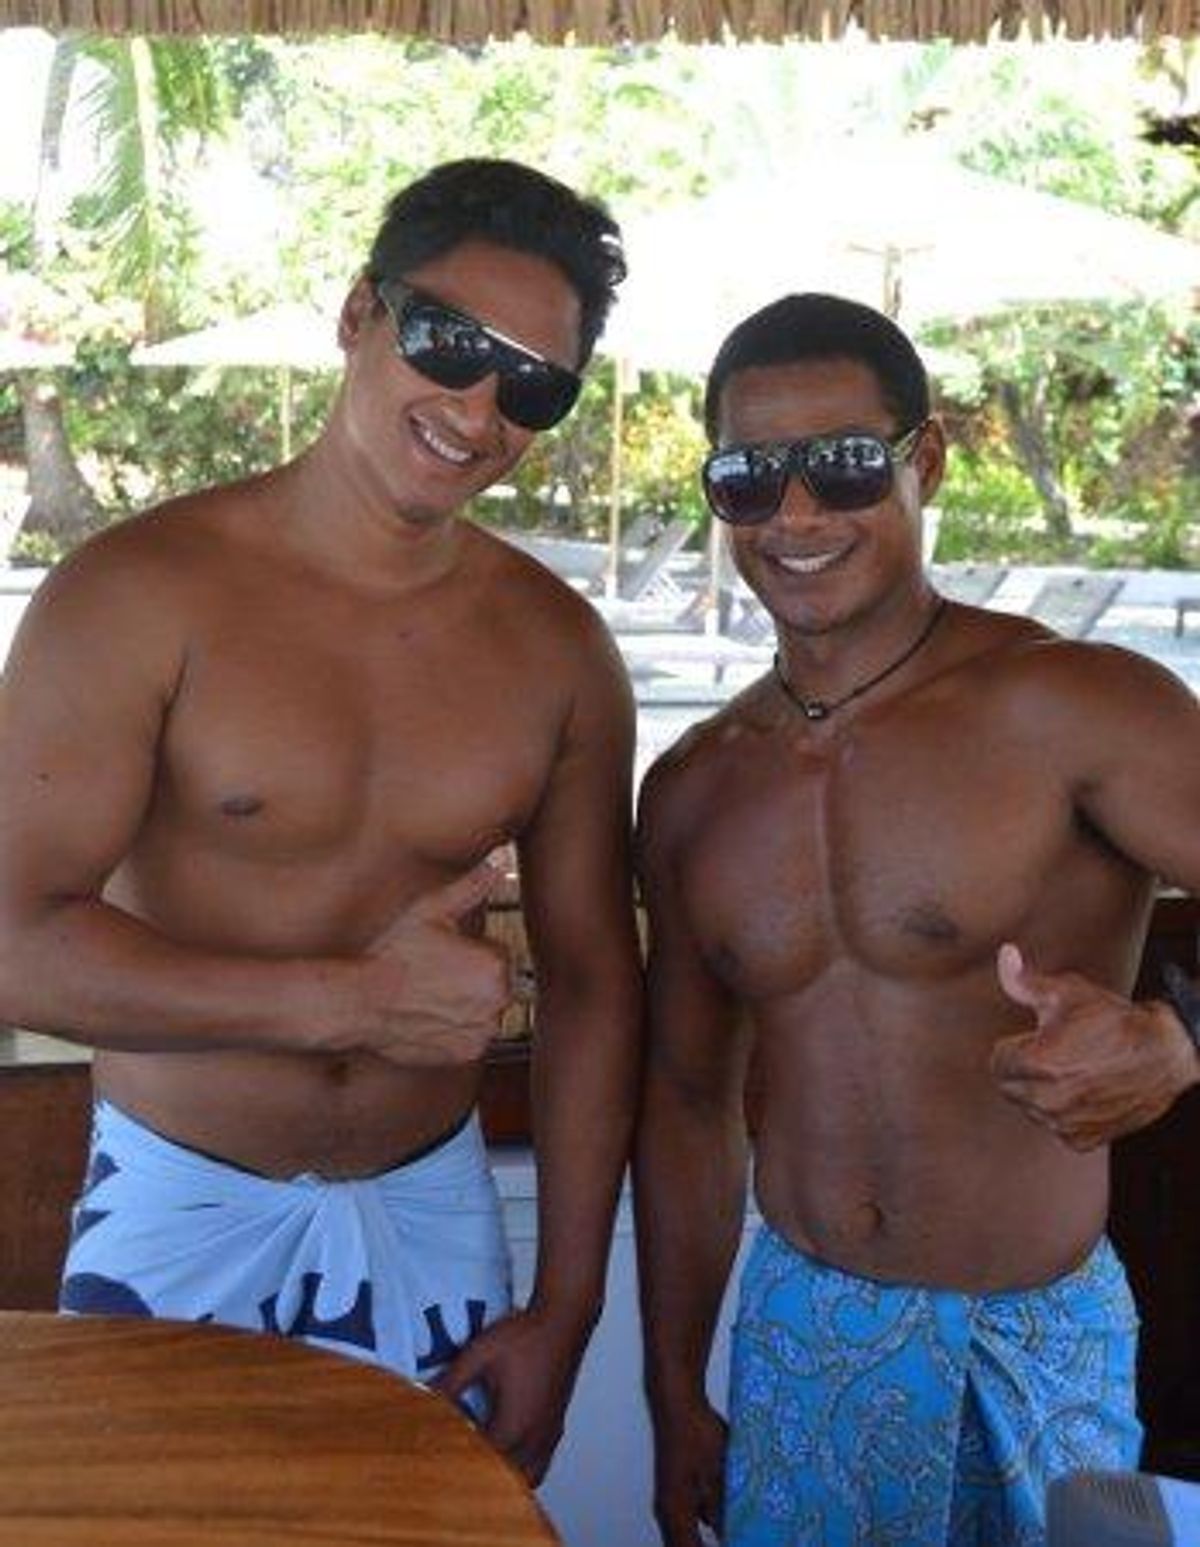 Tahiti: Honeymoon Capital of The World Welcomes Gay Newlyweds